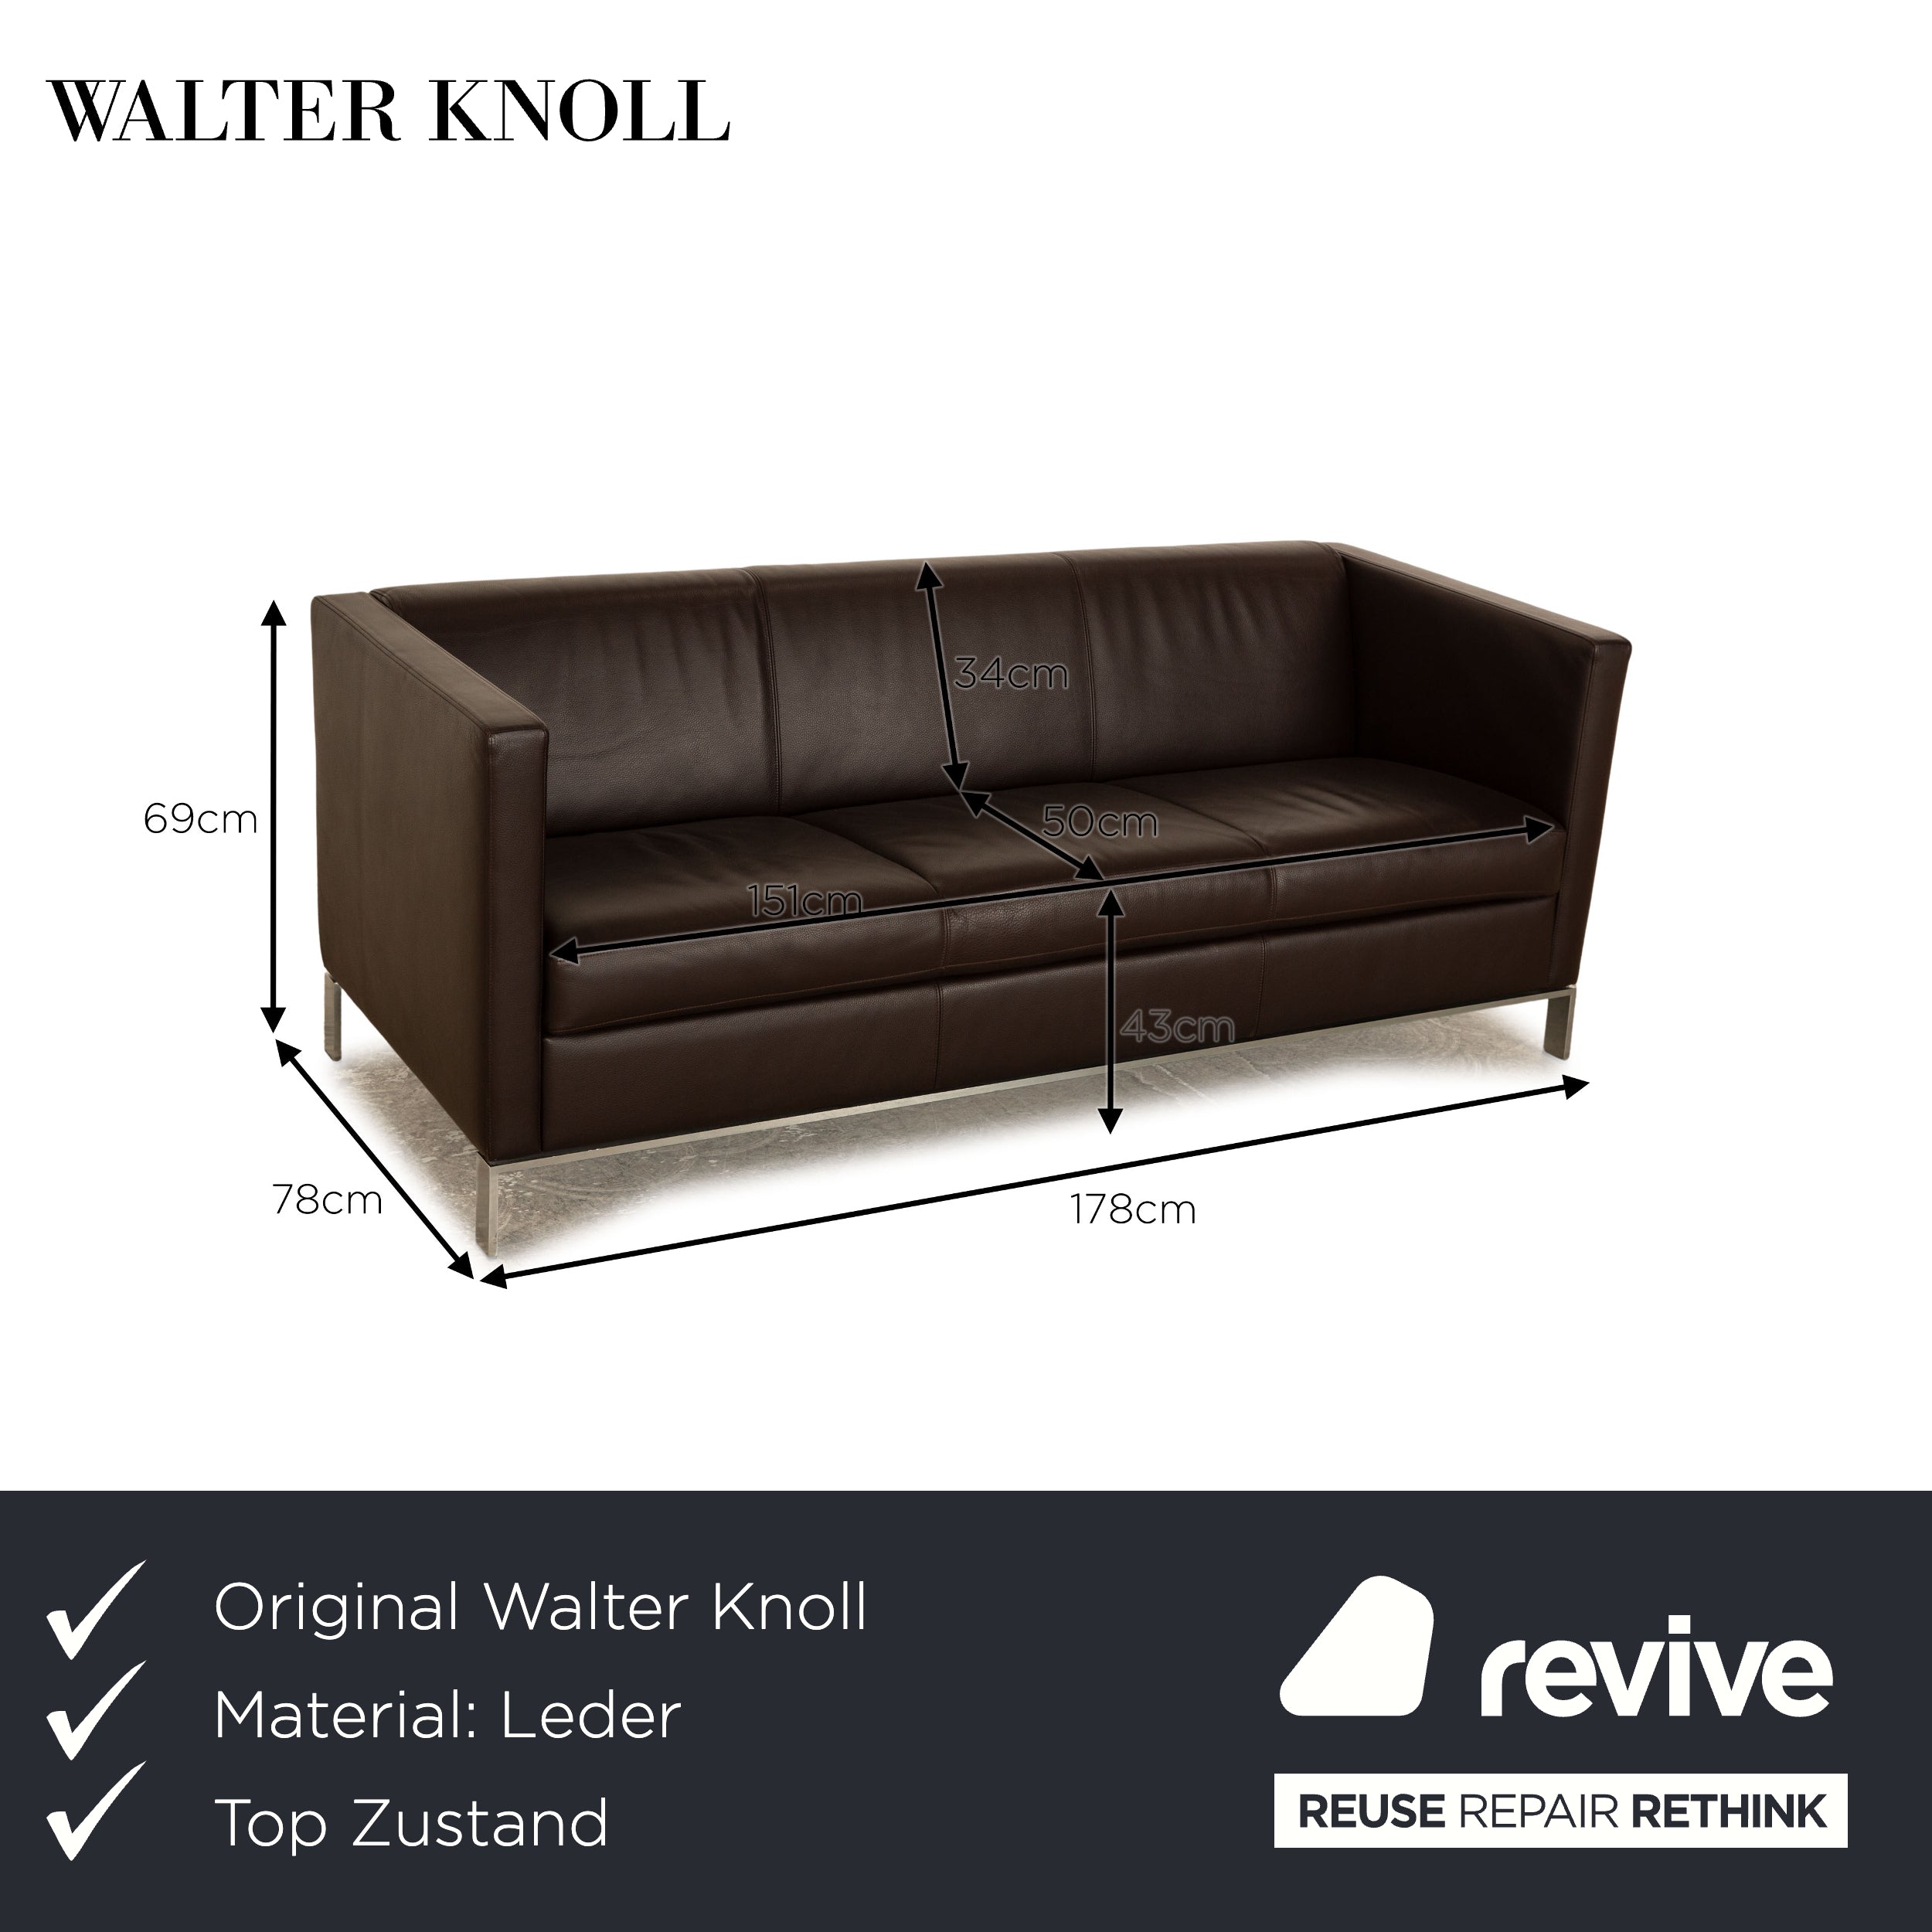 Walter Knoll Foster 501 Leder Dreisitzer Braun Sofa